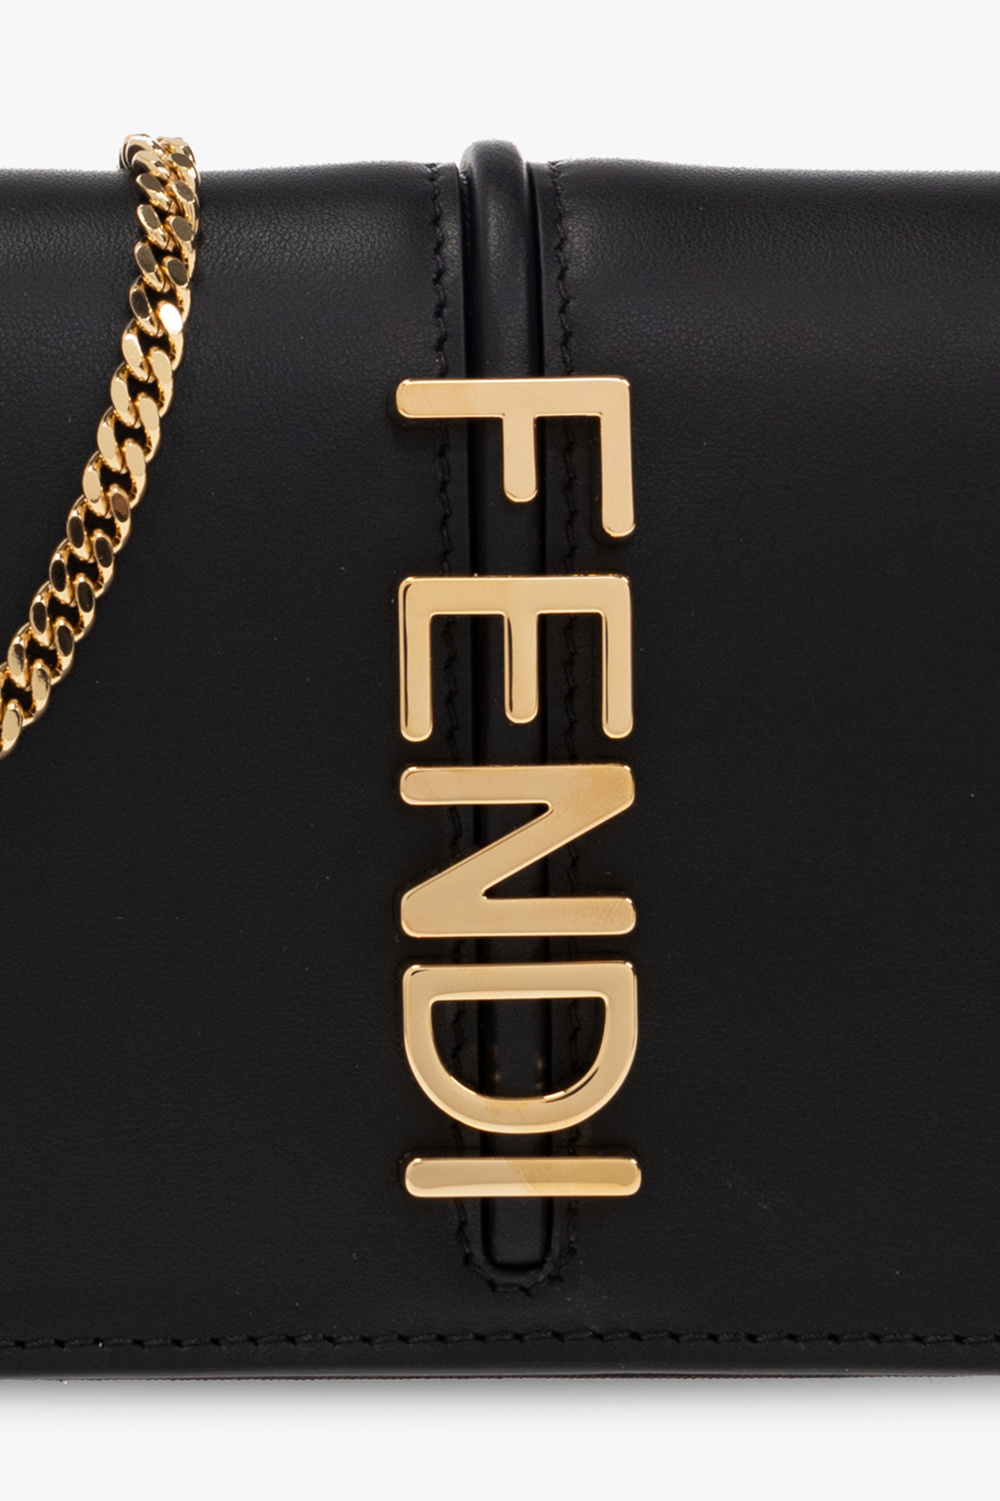 Fendi - Fendigraphy Leather Chain Wallet